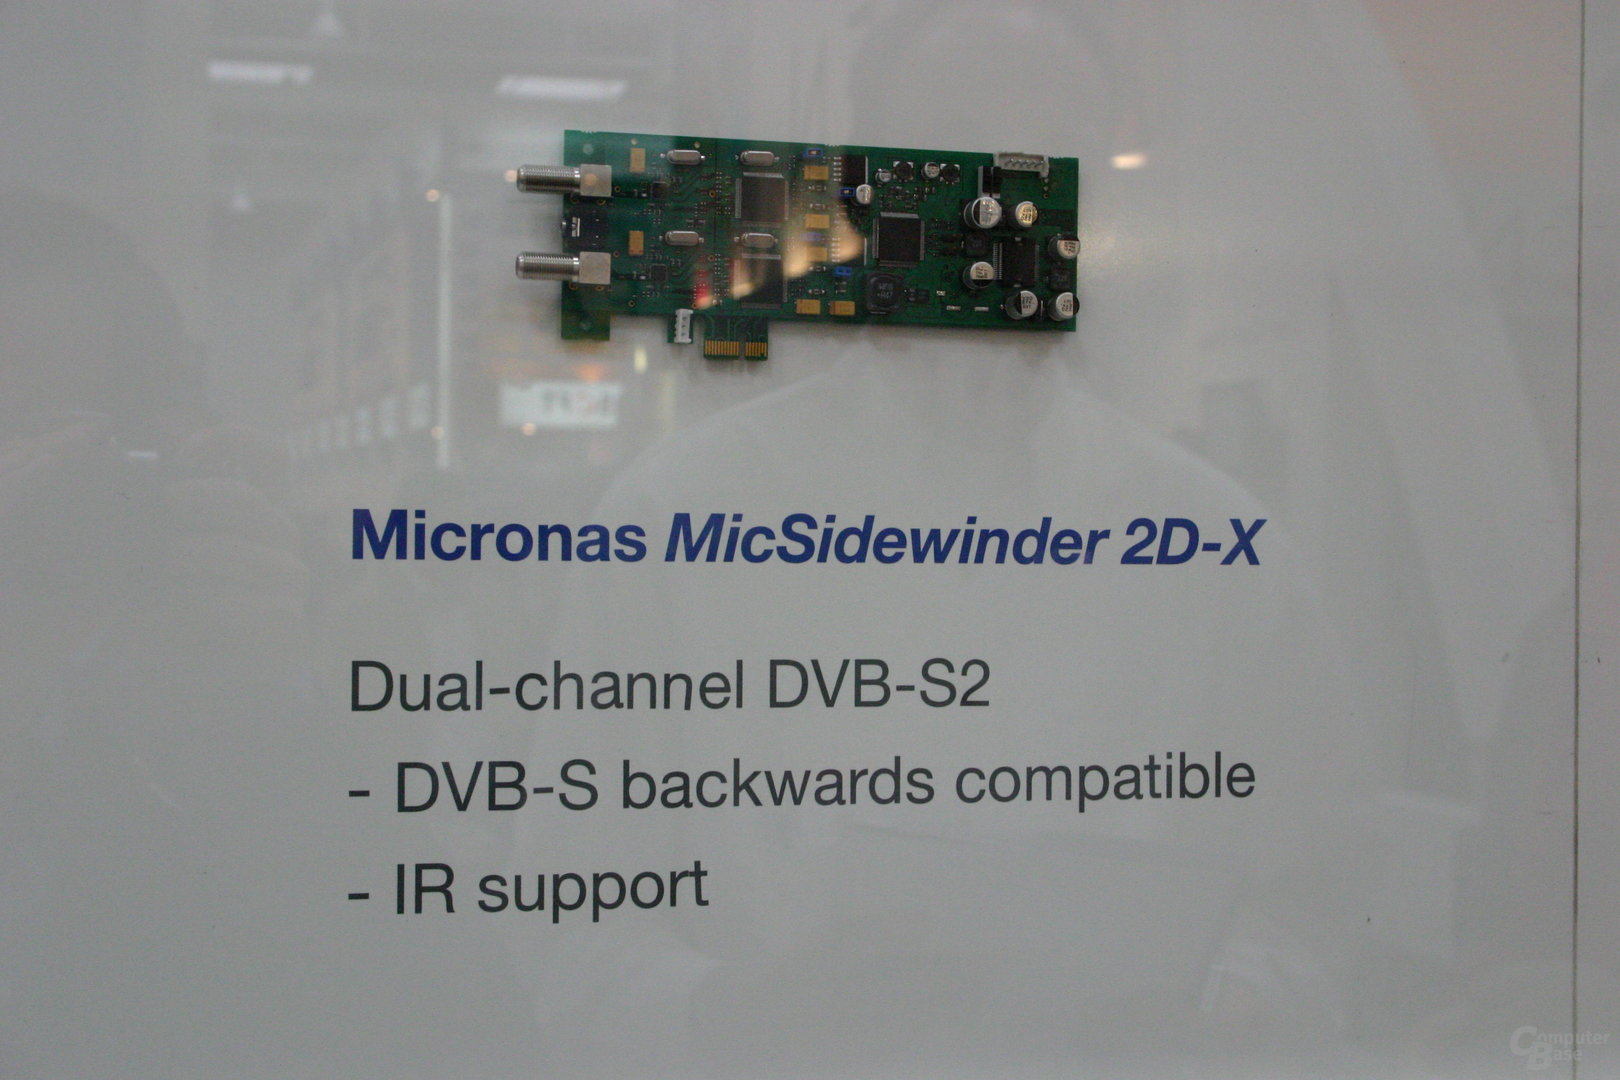 Micronas MicSidewinder 2D-X für DVB-S2